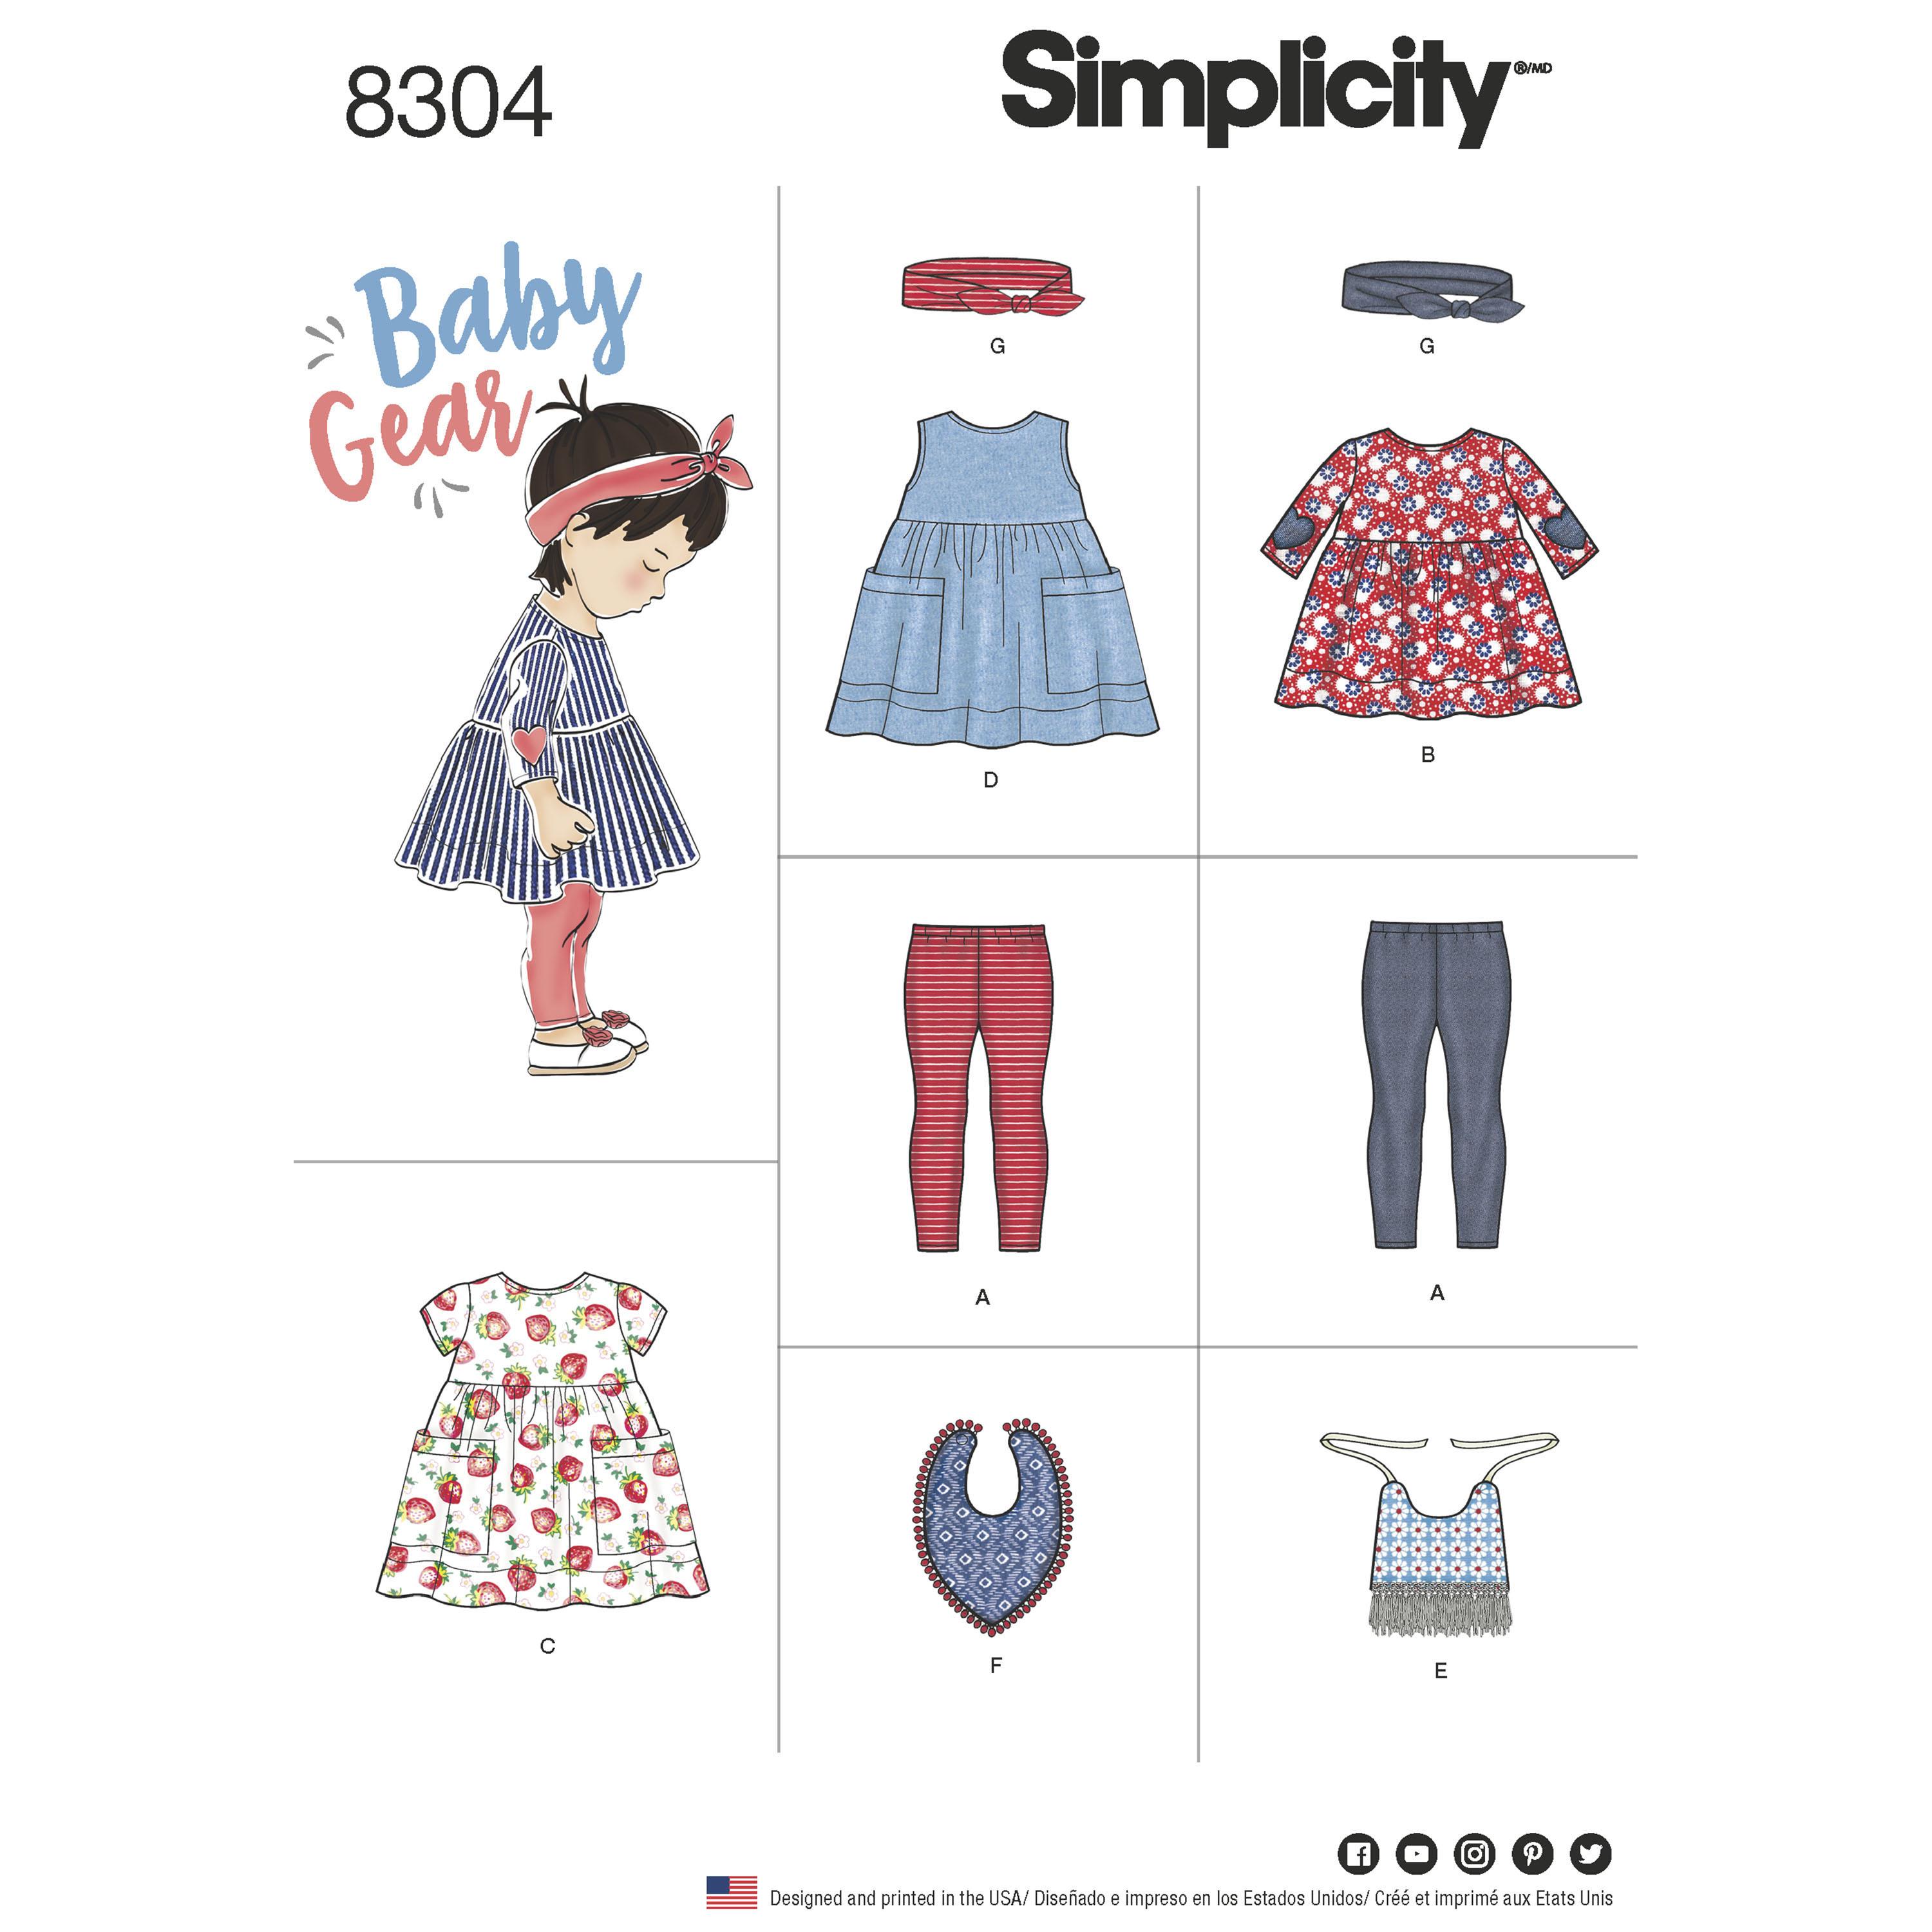 Simplicity S8304 Babies', Leggings, Top, Dress, Bibs and Headband in thress sizes S(17") M(18") L(19")